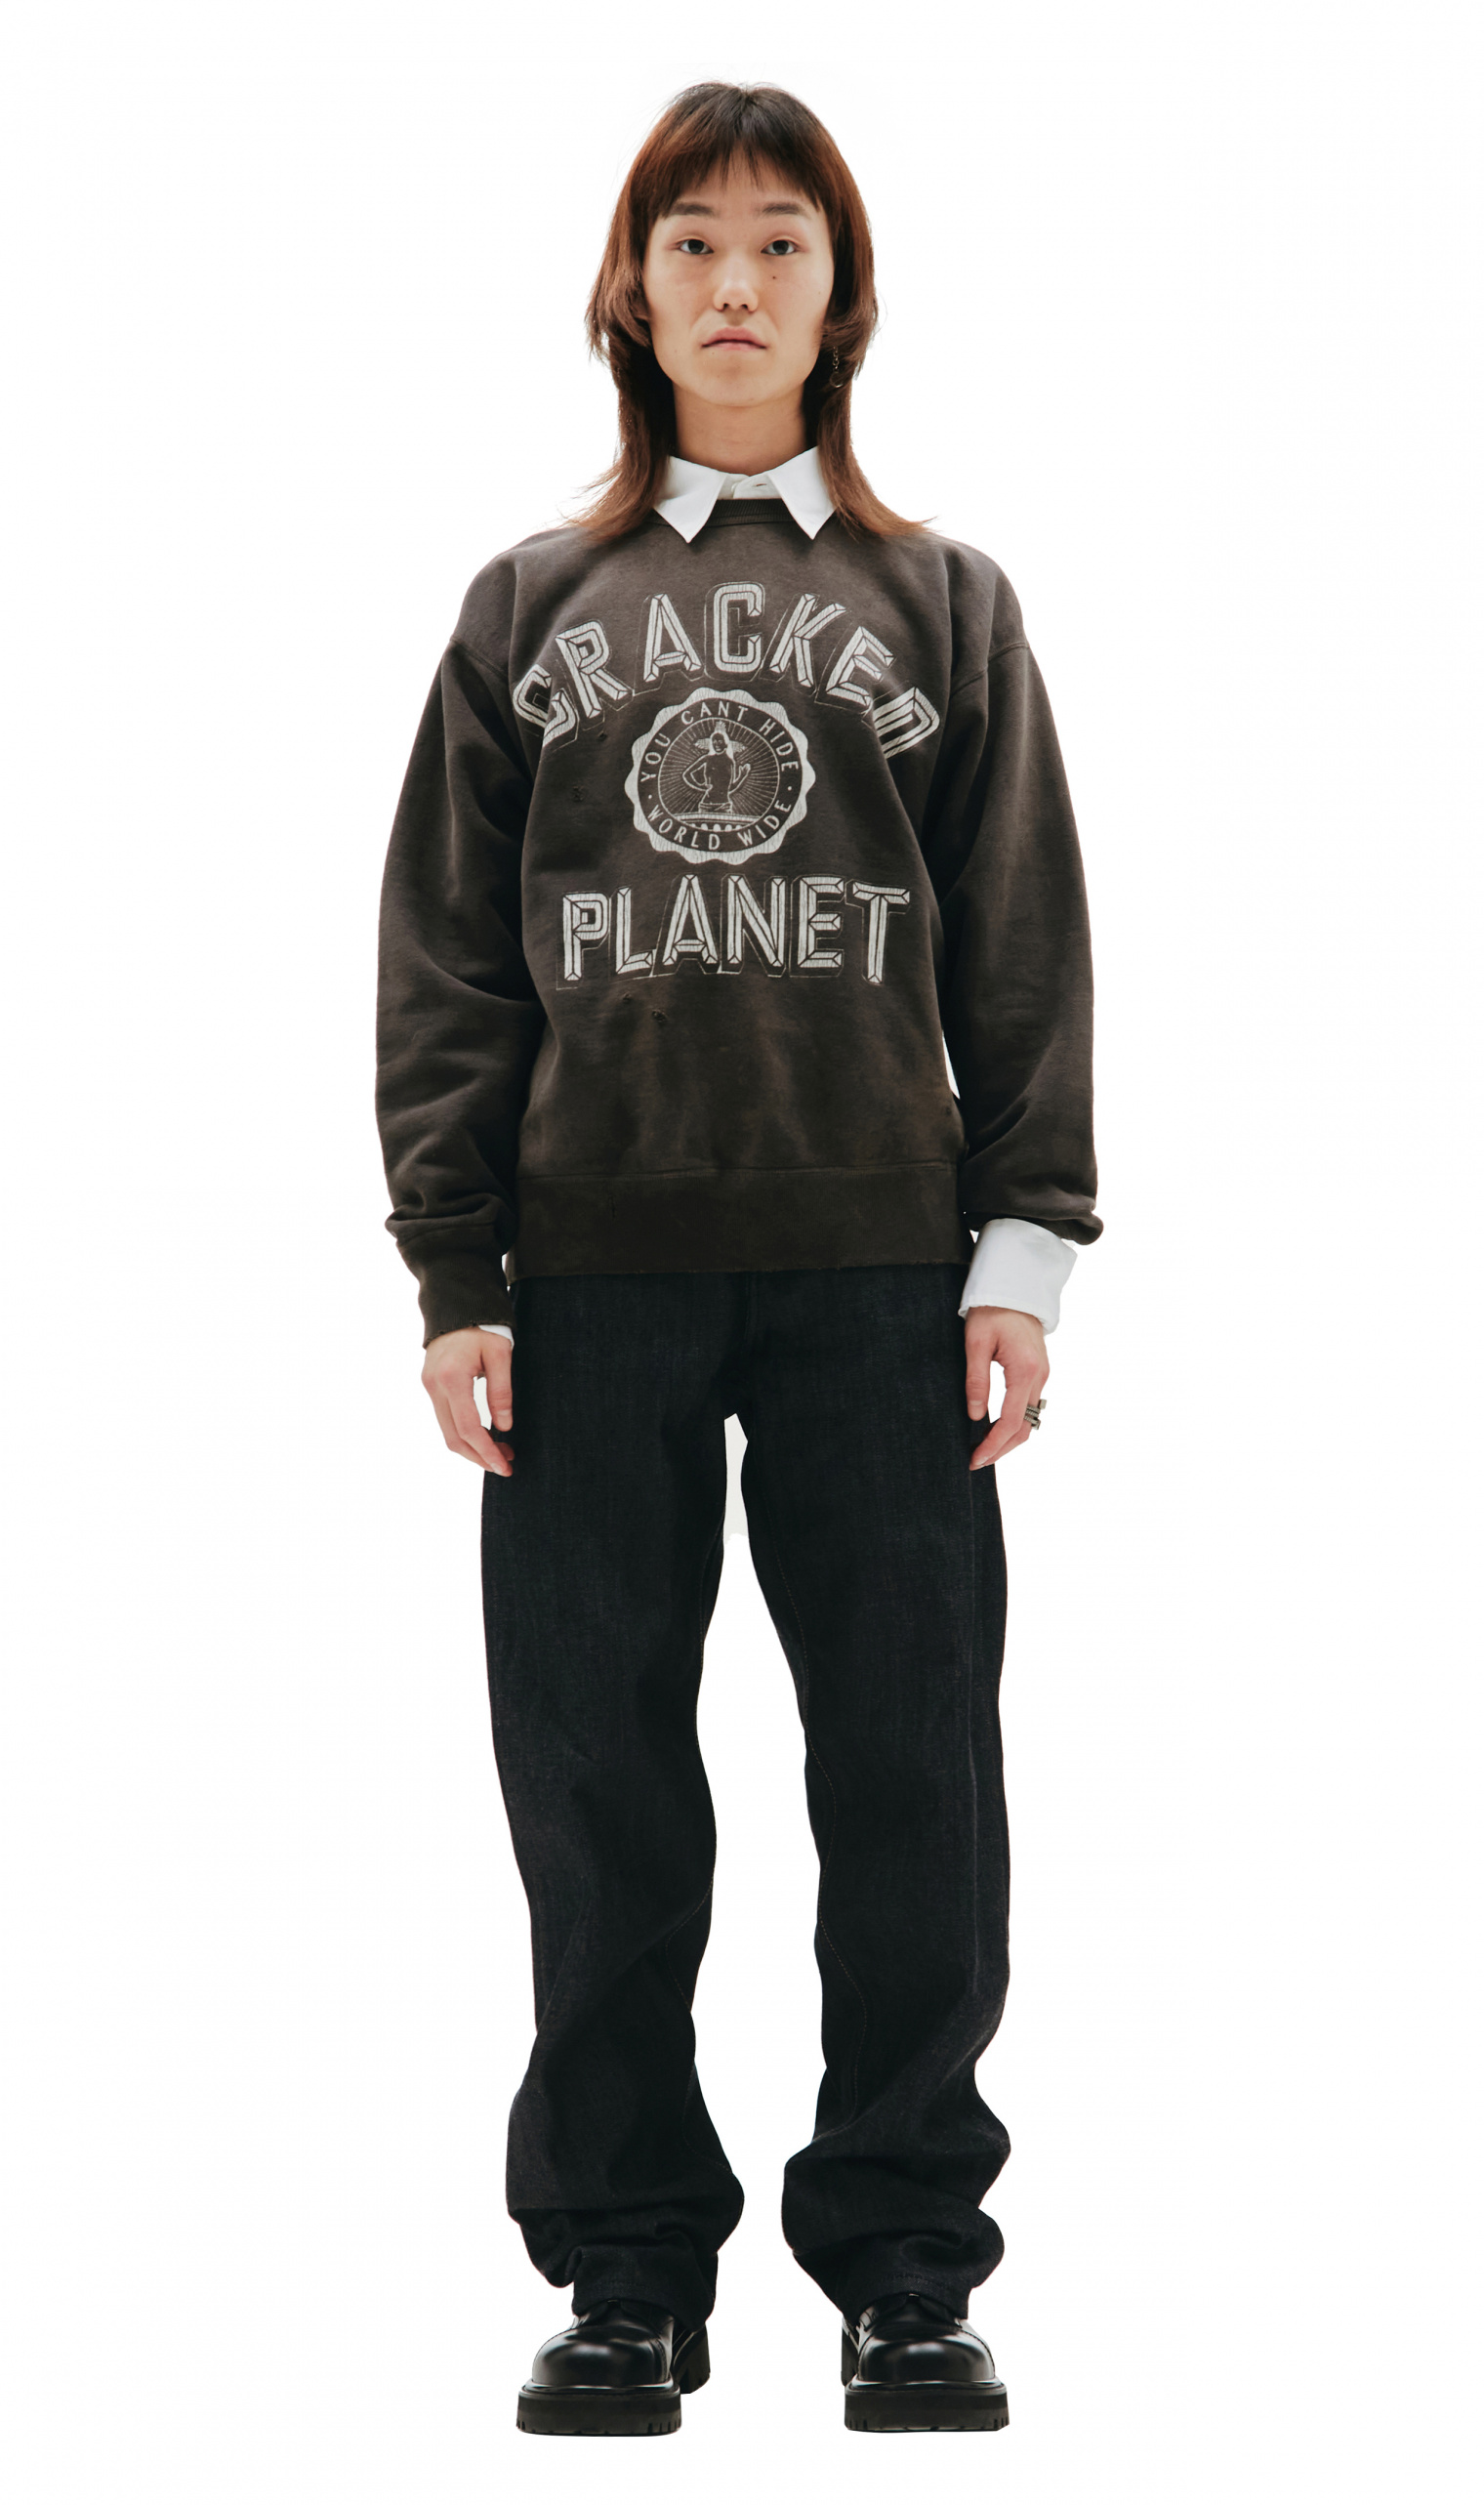 Saint Michael Cracked Planet Printed Sweatshirt